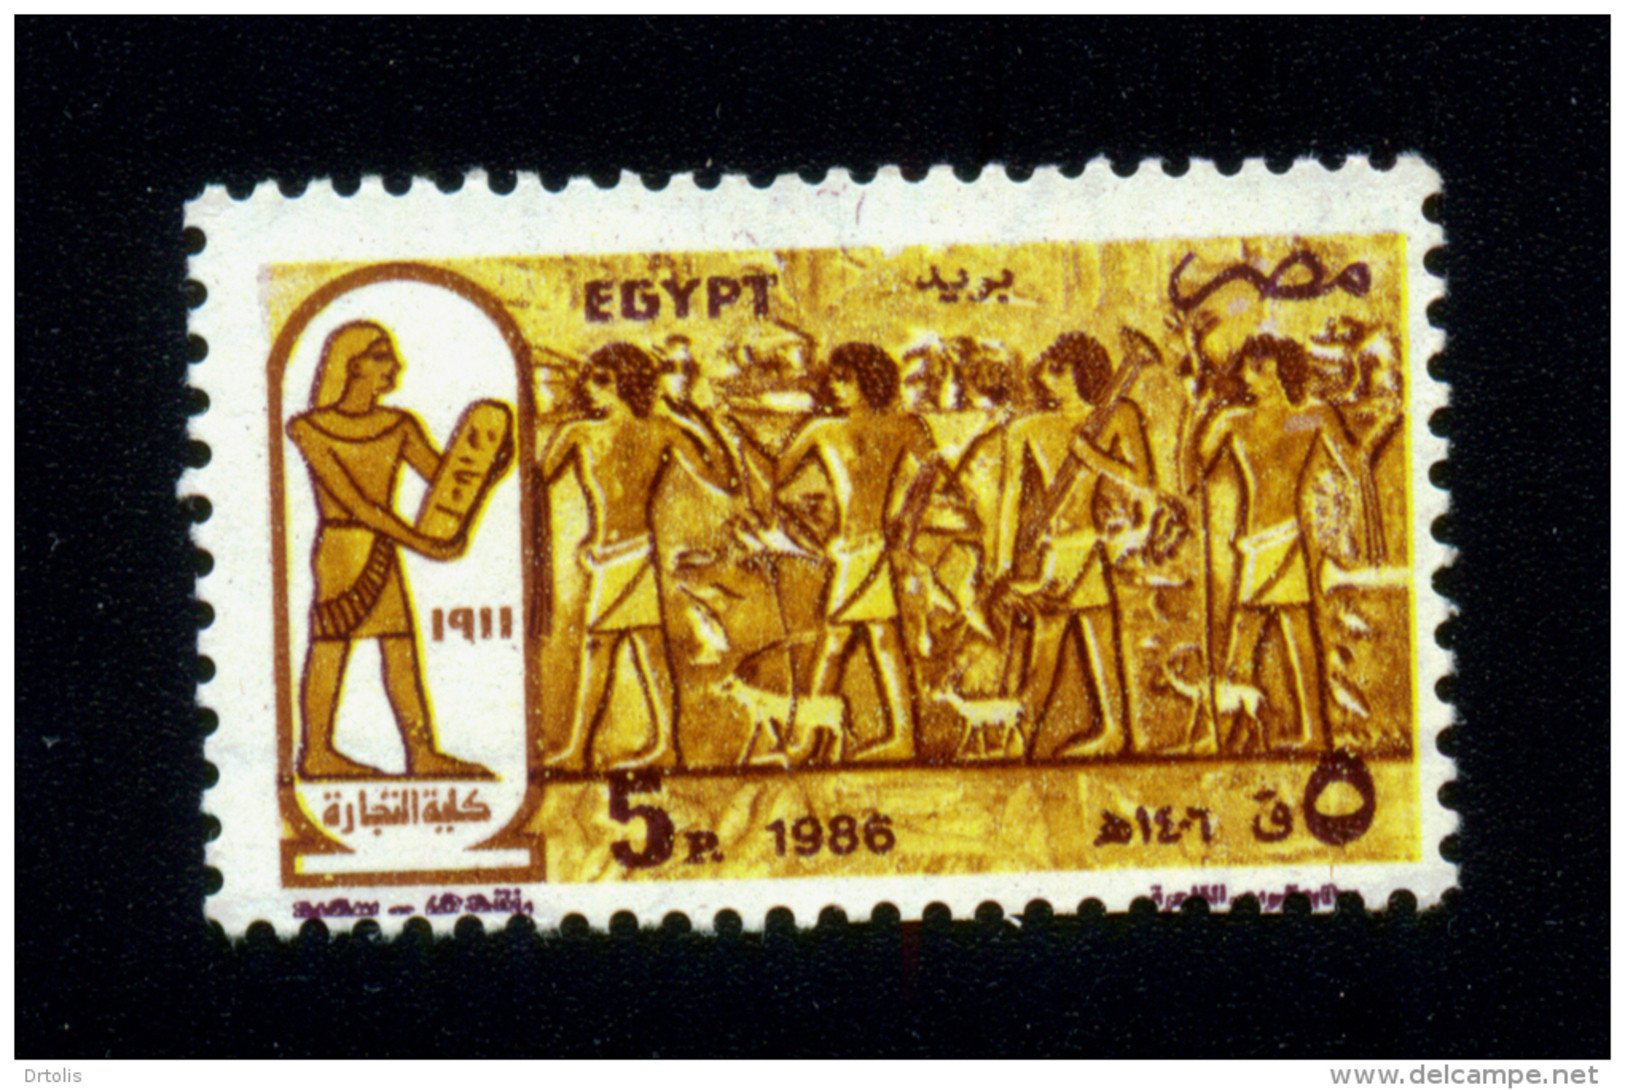 EGYPT / 1986 / FACULTY OF COMMERCE ; CAIRO UNIVERSITY / TOMB PAINTING ( BTAHHOTTEB ) ; SAKKARA / MNH / VF - Unused Stamps